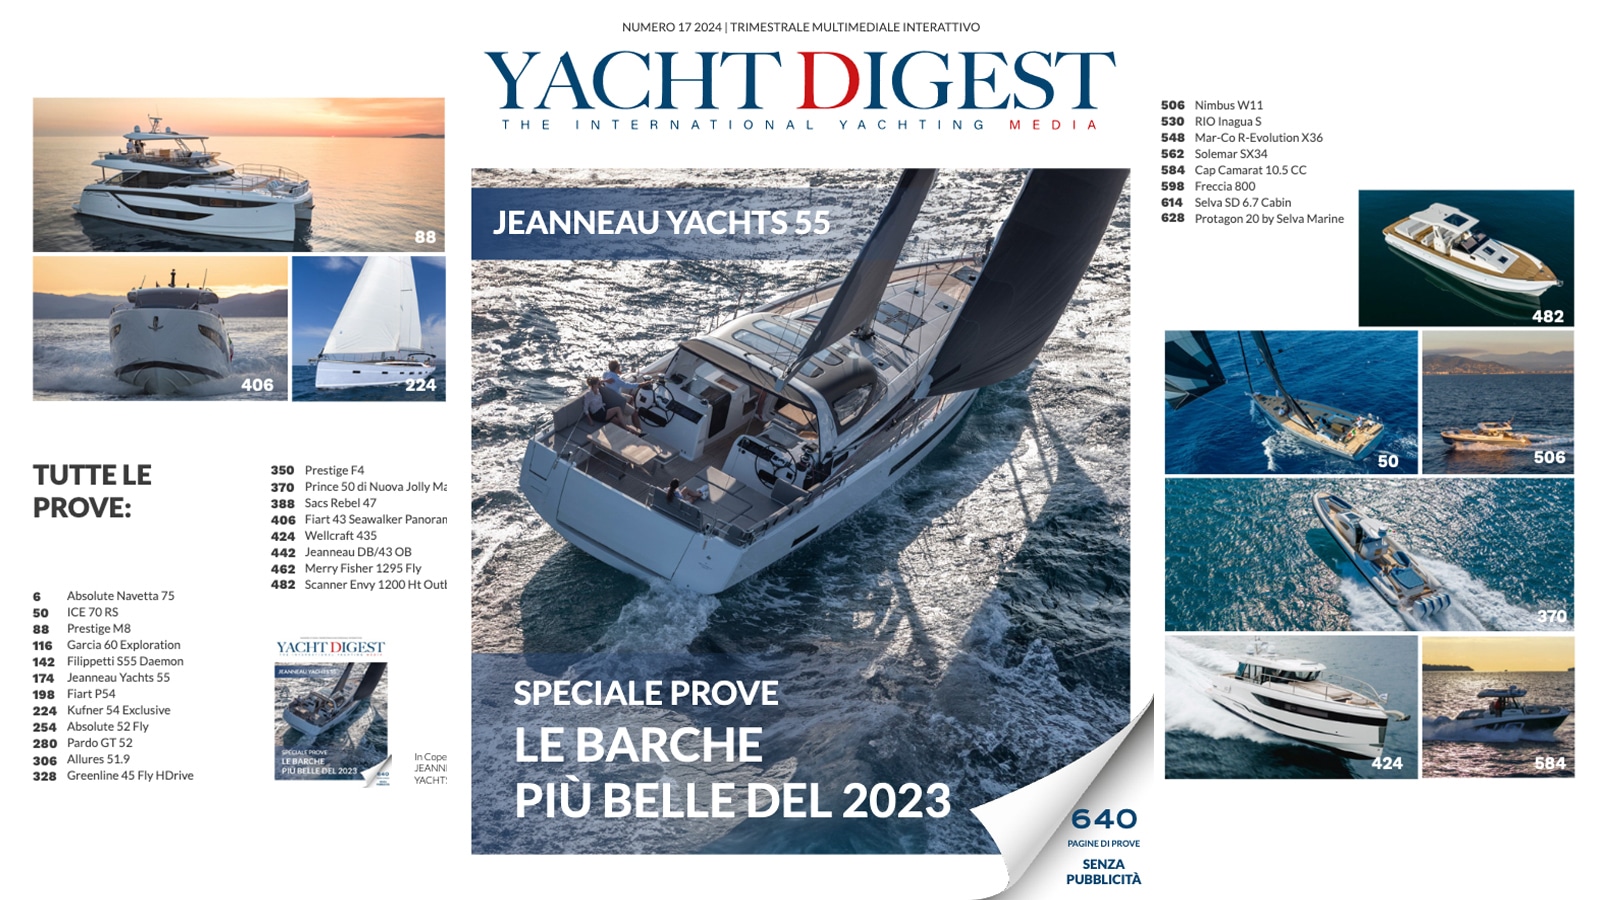 Yacht Digest 17: è online lo Speciale Prove dedicato alle barche più belle del 2023